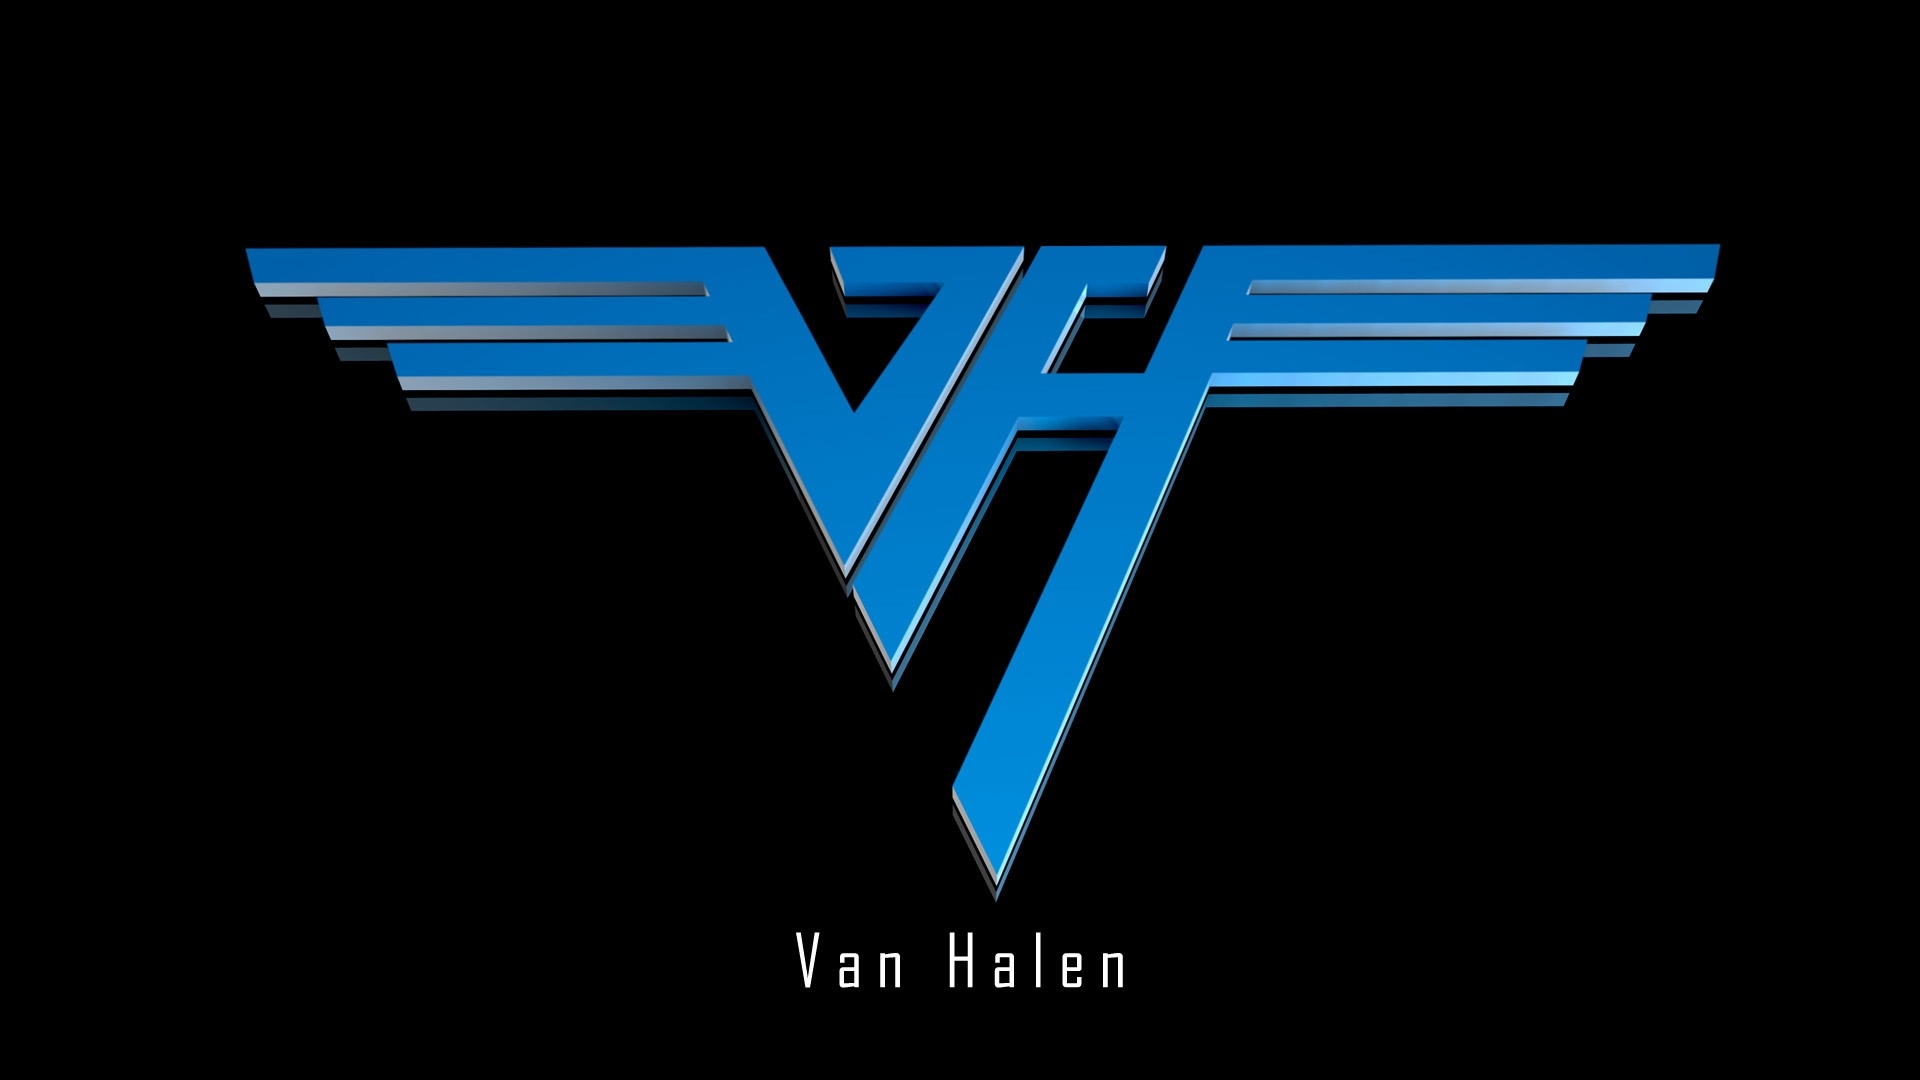 Image Van Halen Logo Pc Android iPhone And iPad Wallpaper